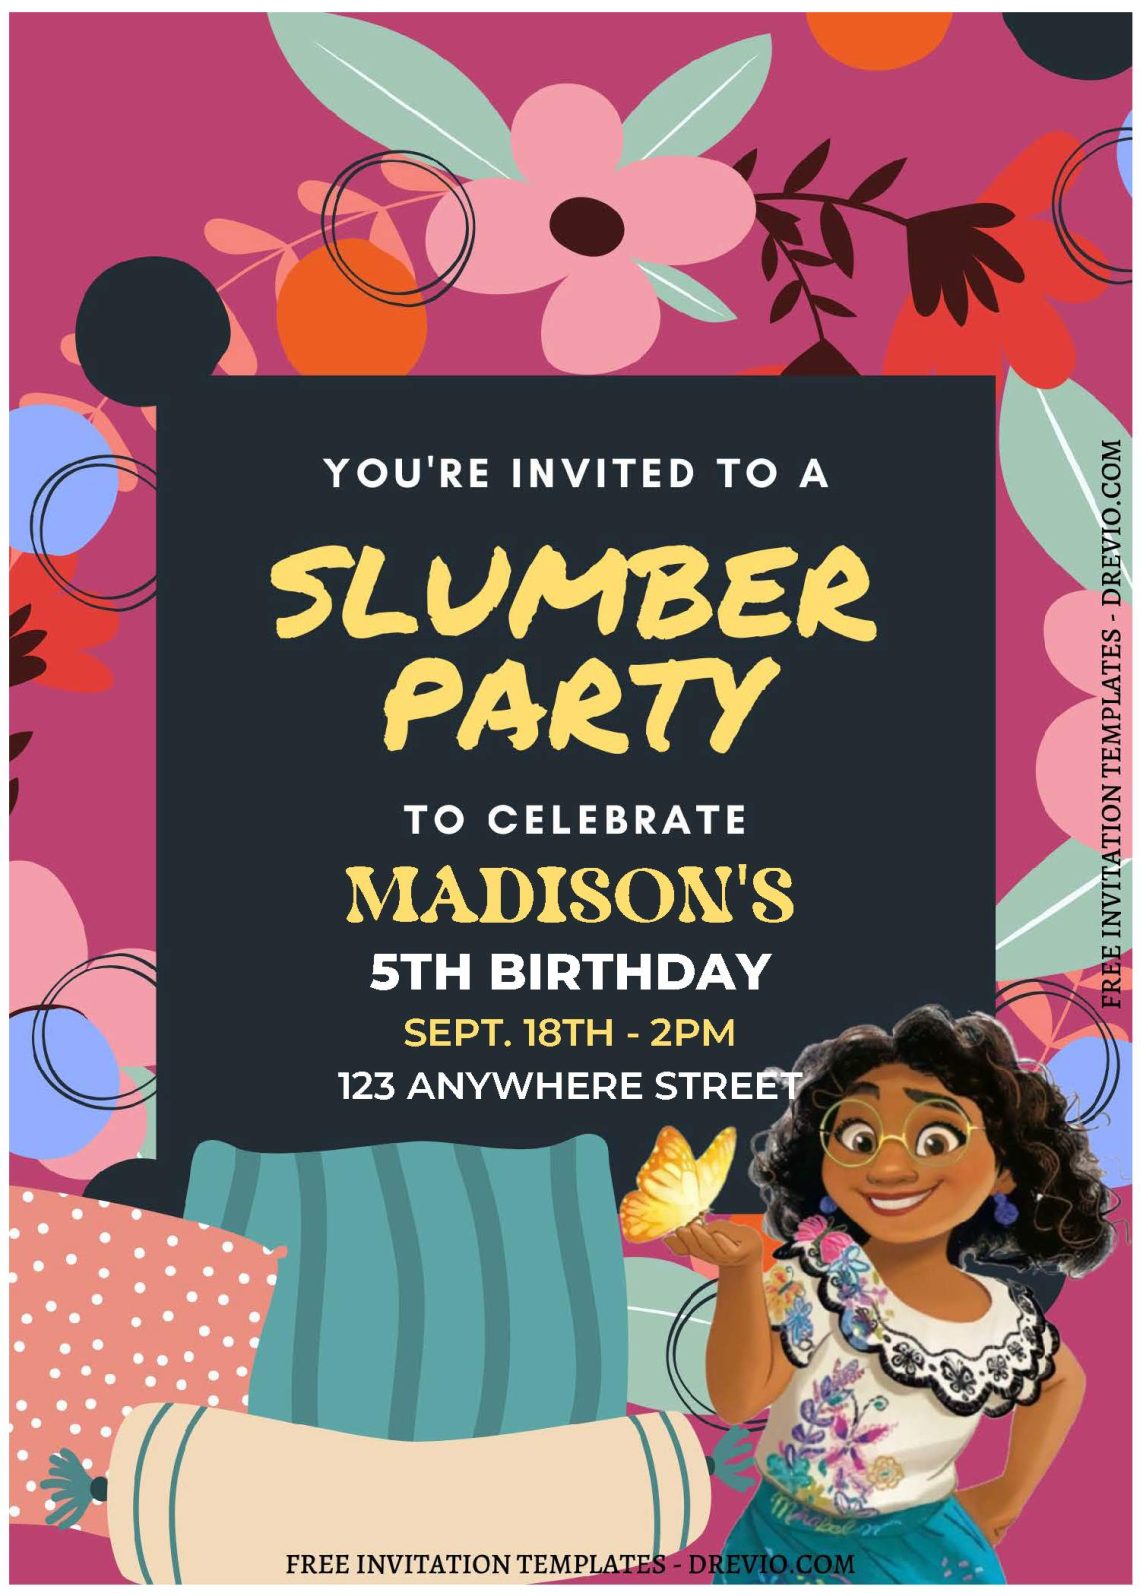 (Free Editable PDF) Disney Encanto Slumber Birthday Party Invitation Templates A